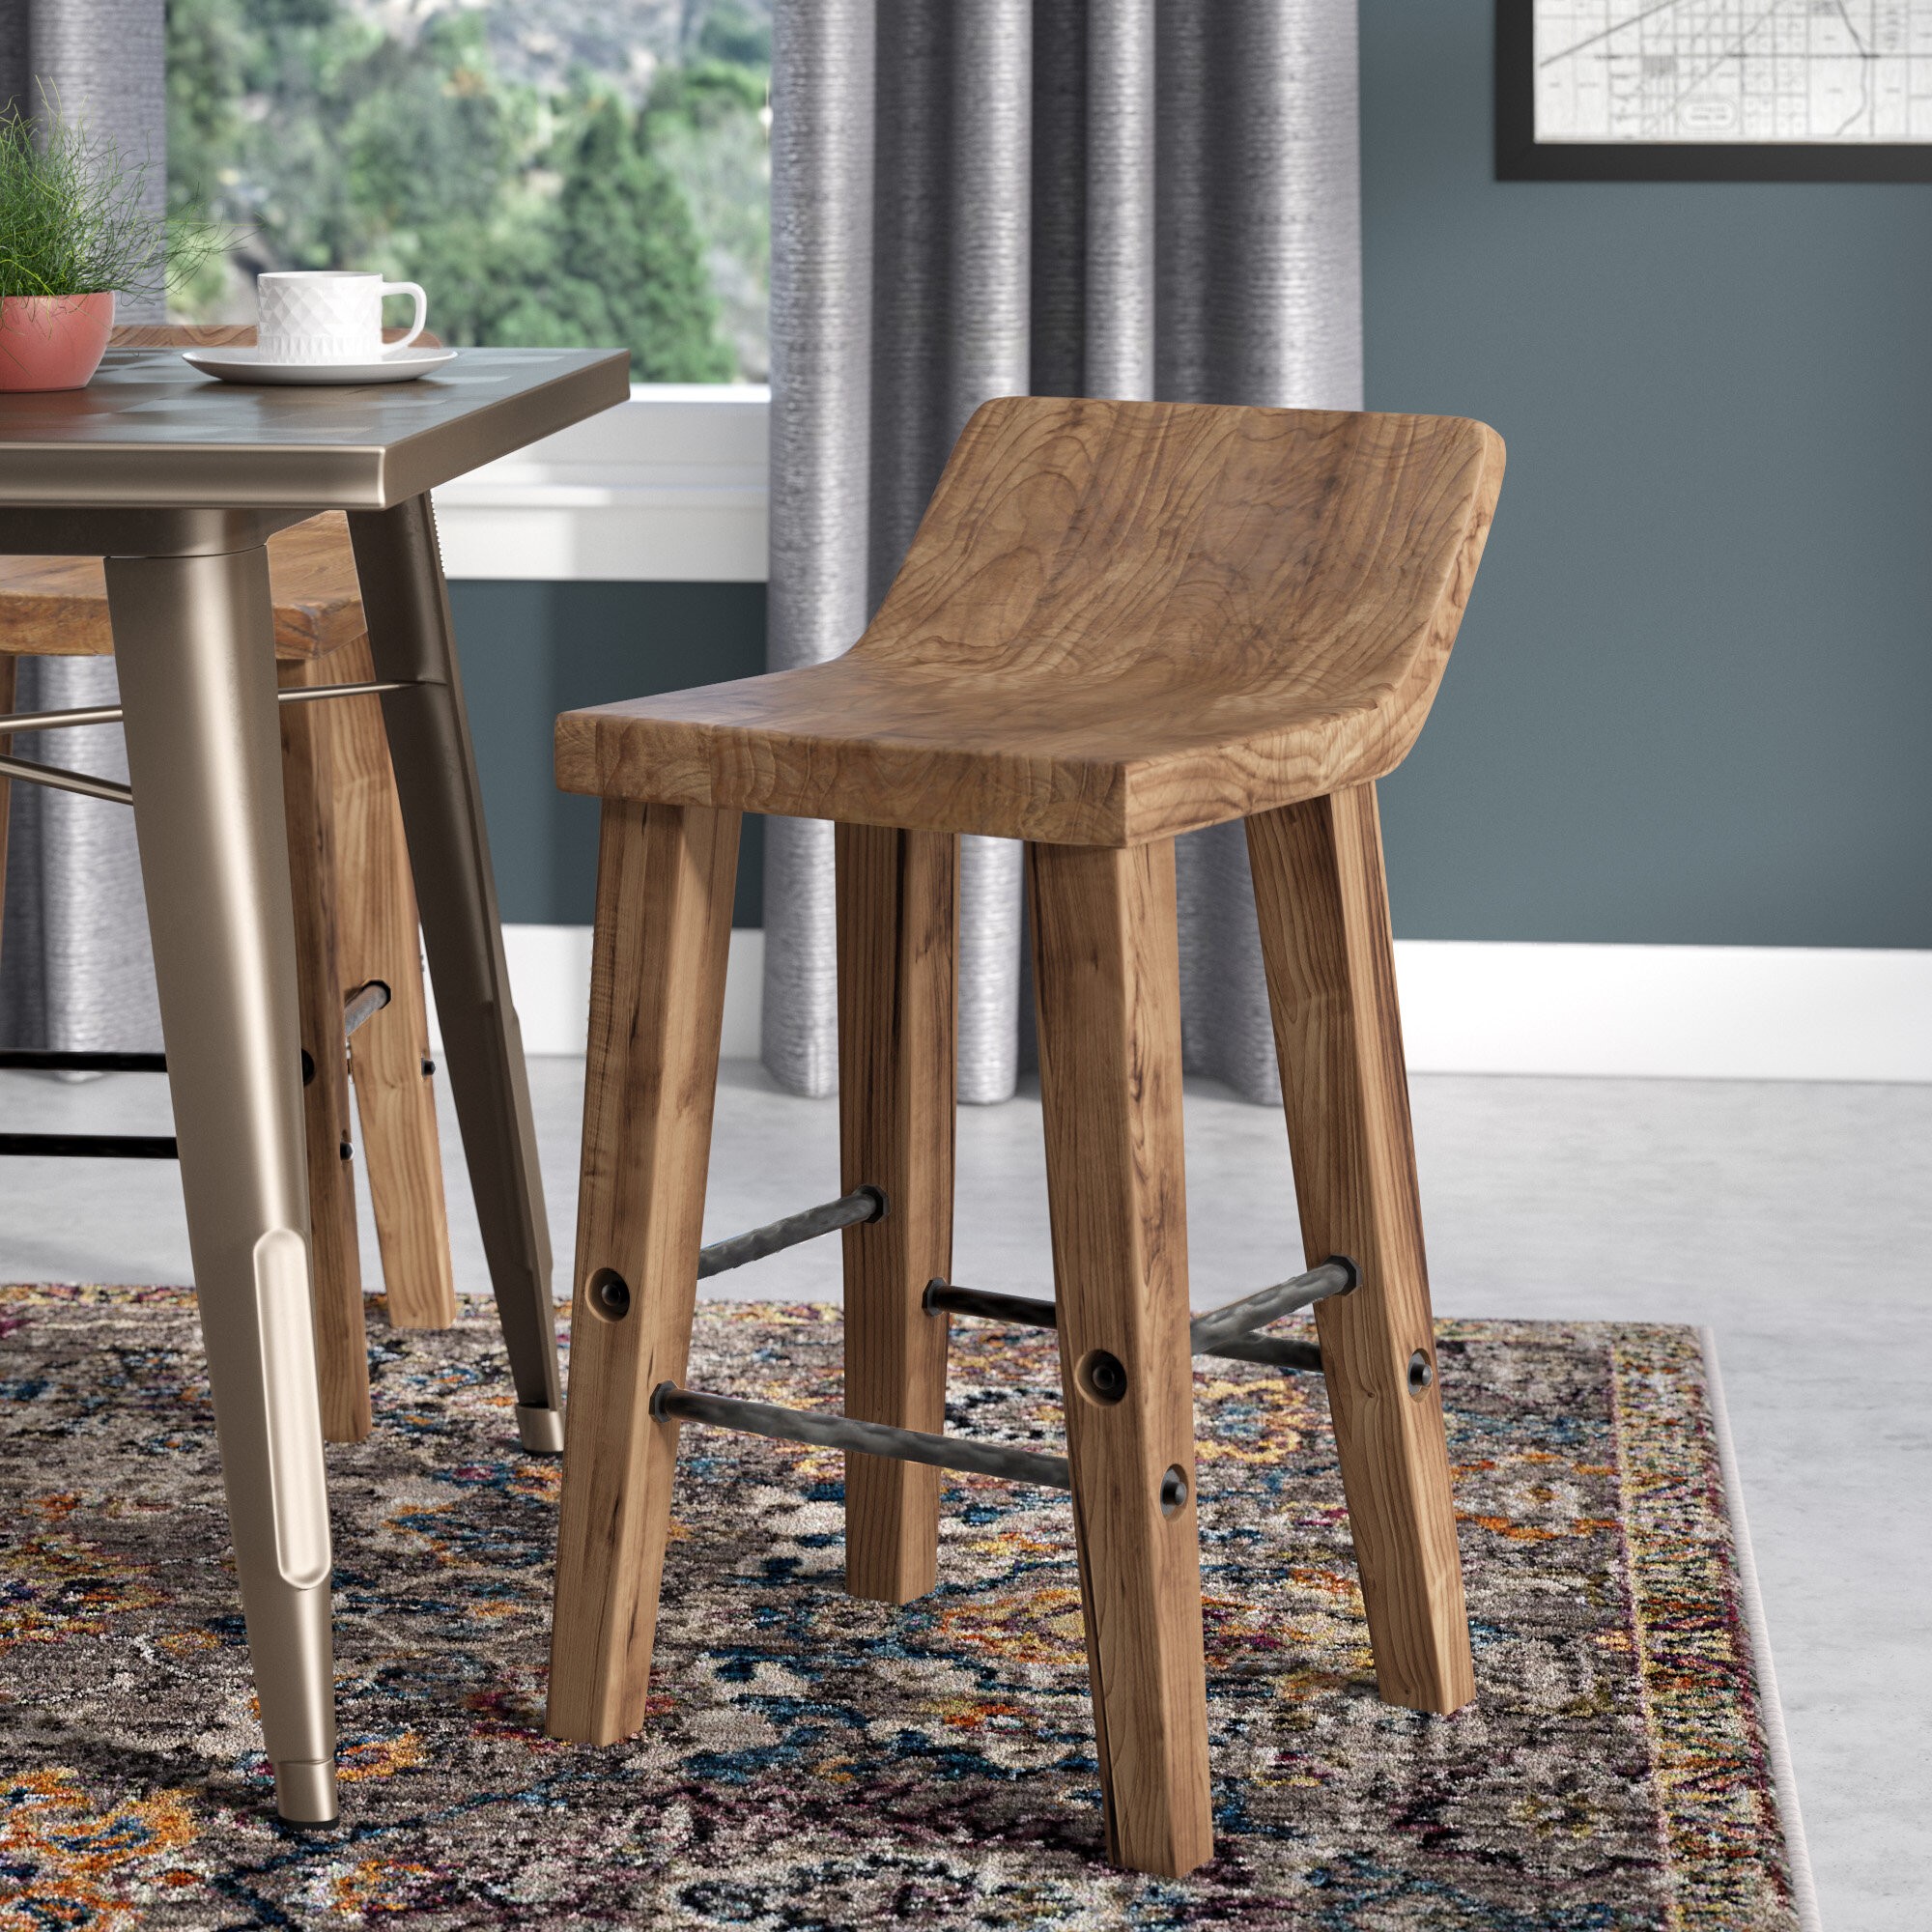 30” Rustic Wooden Barstool